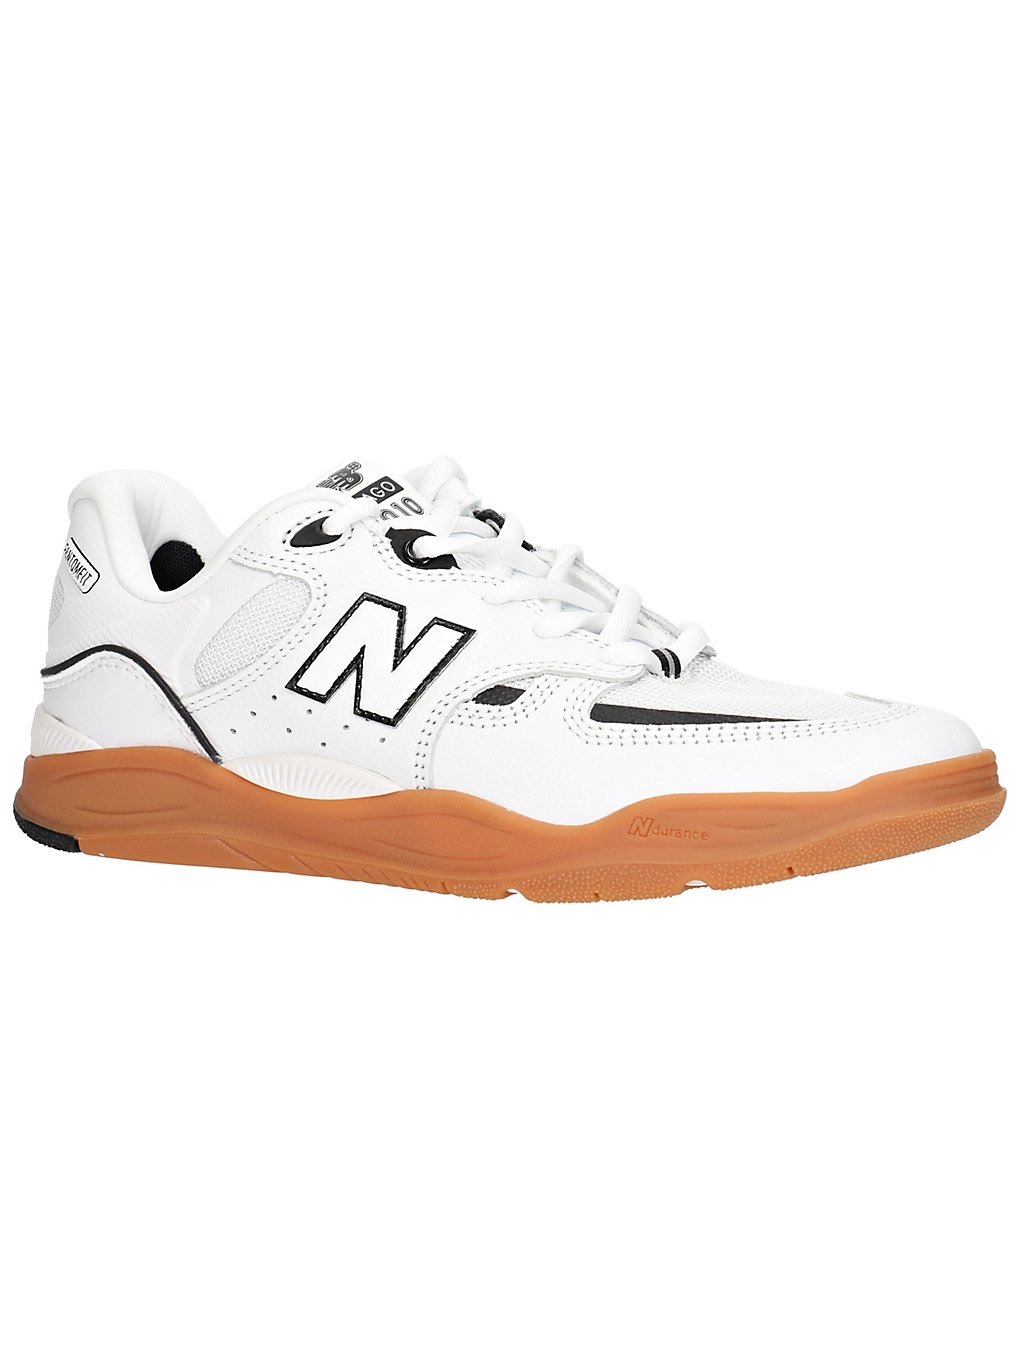 New Balance Numeric NM101 Skate Shoes black